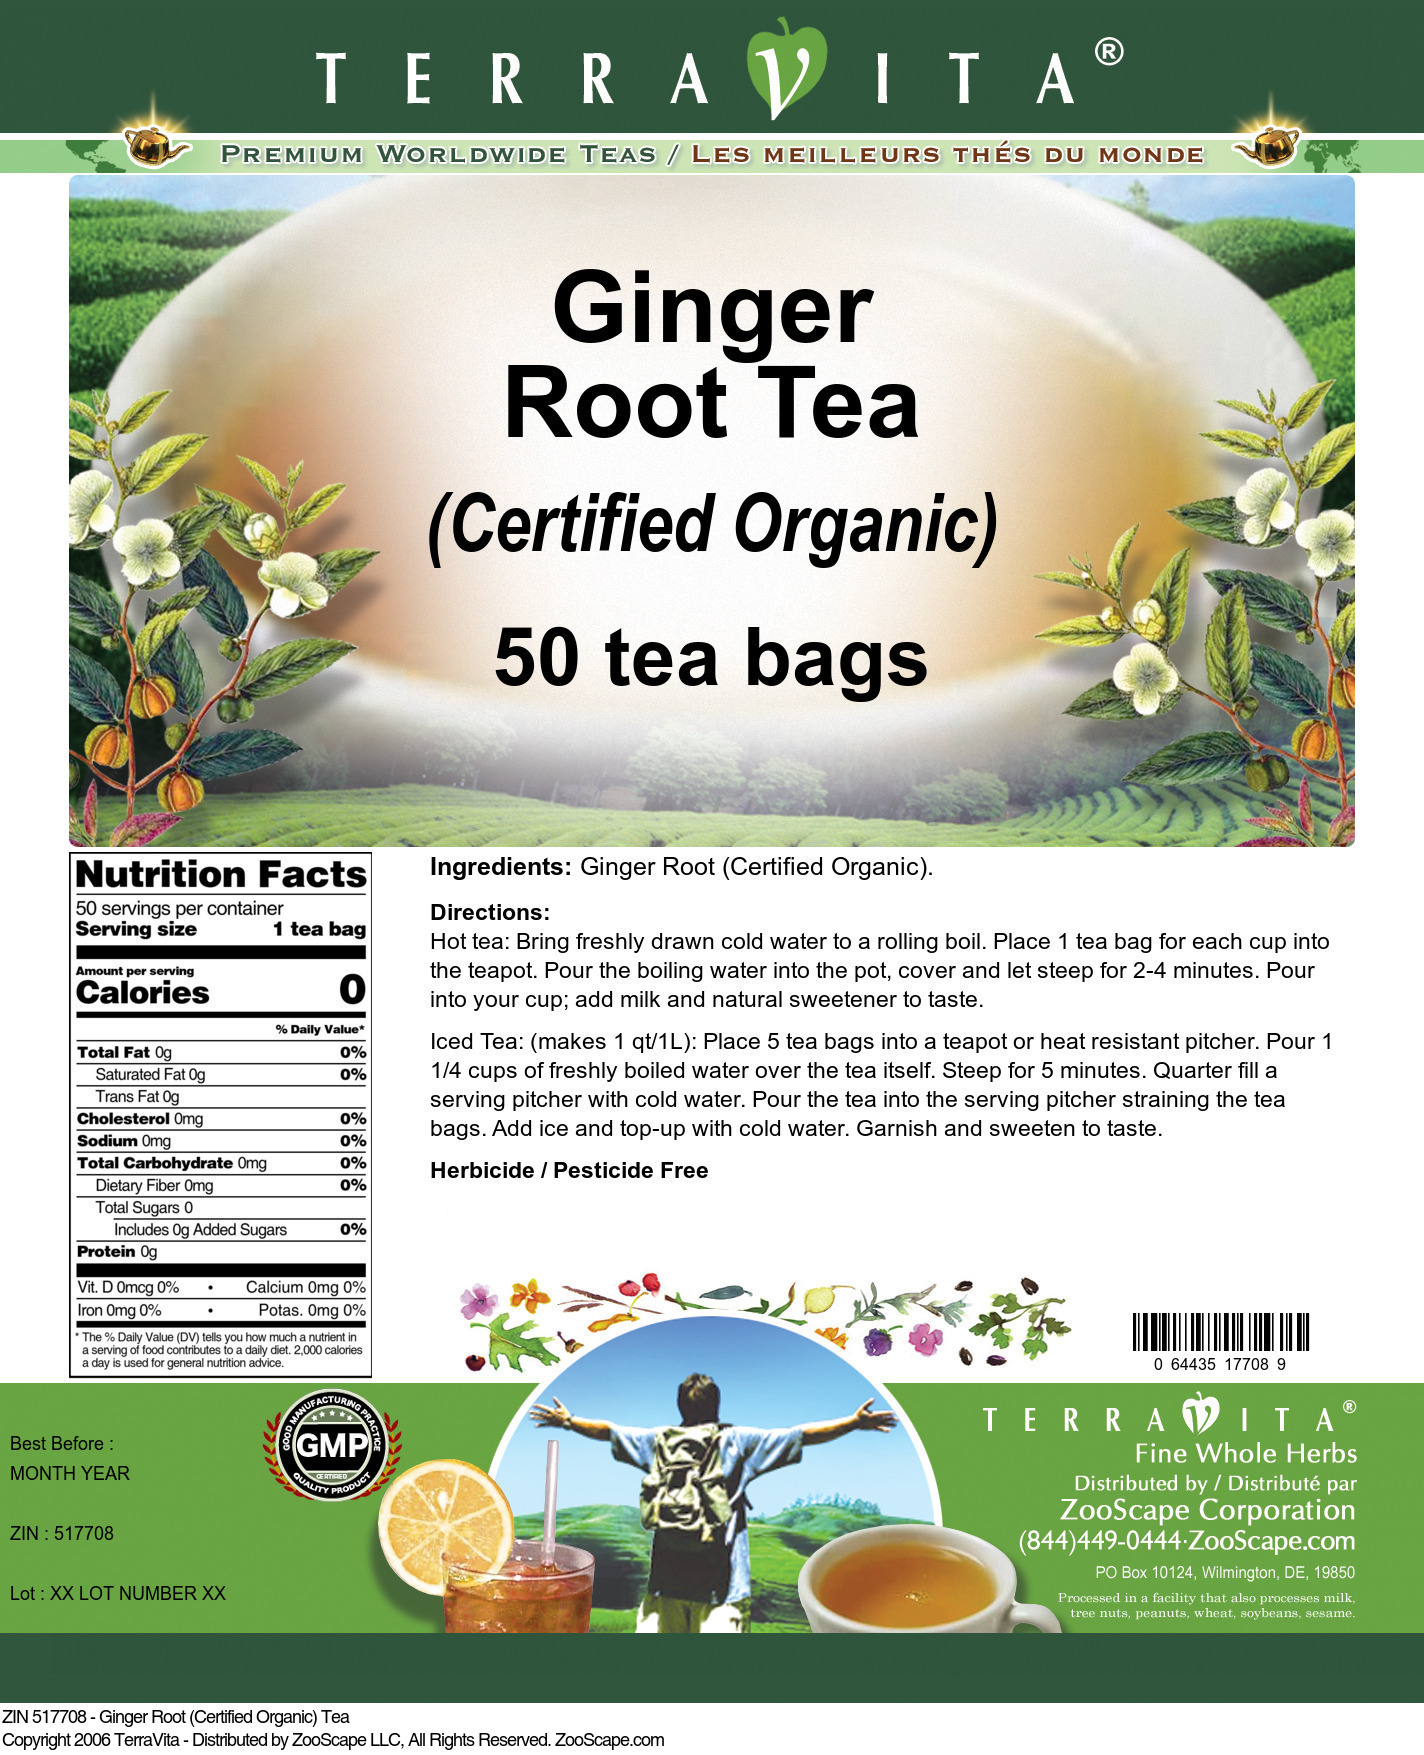 Ginger Root (Certified Organic) Tea - Label